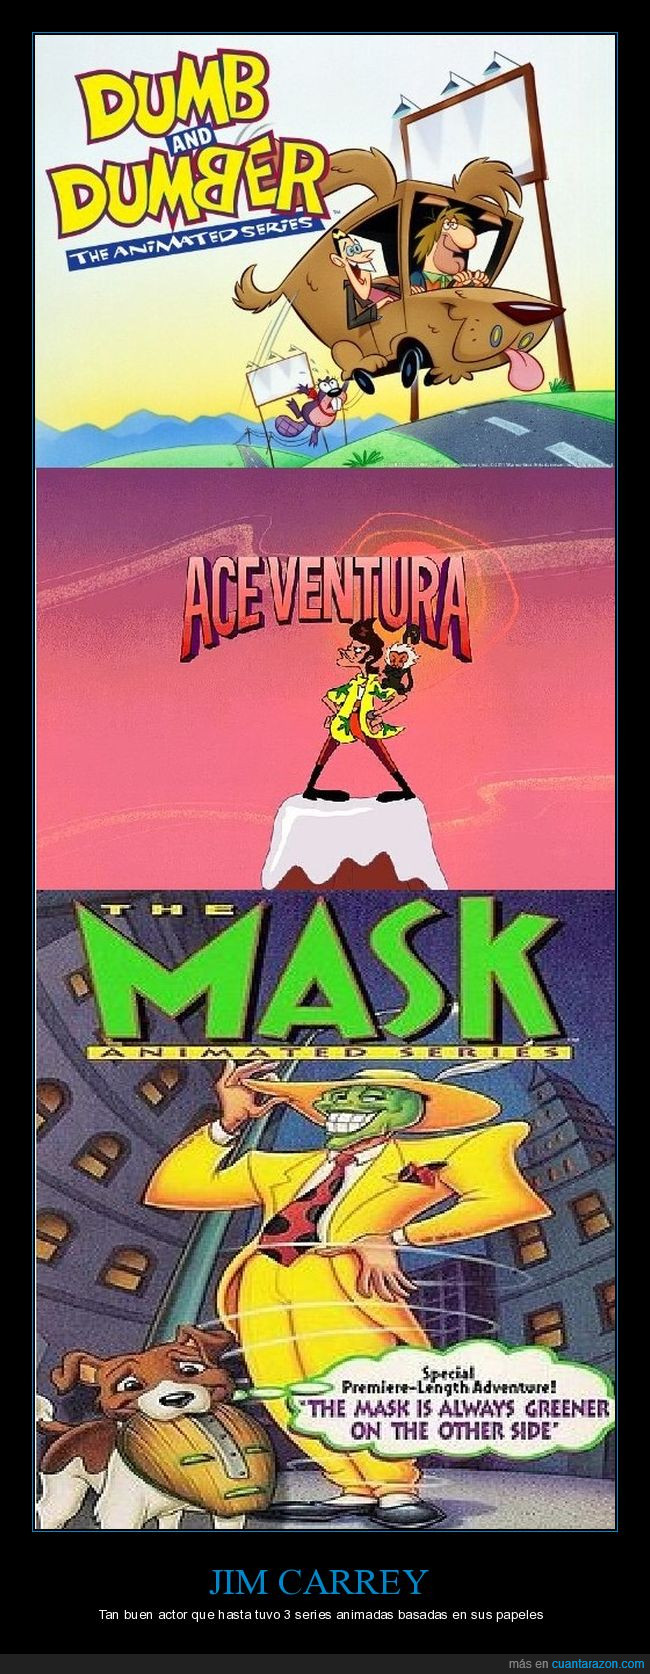 Ace Ventura,actor,Dumb and Dumber,Jim Carrey,La Mascara,serie animada,The Mask,tonto y retonto